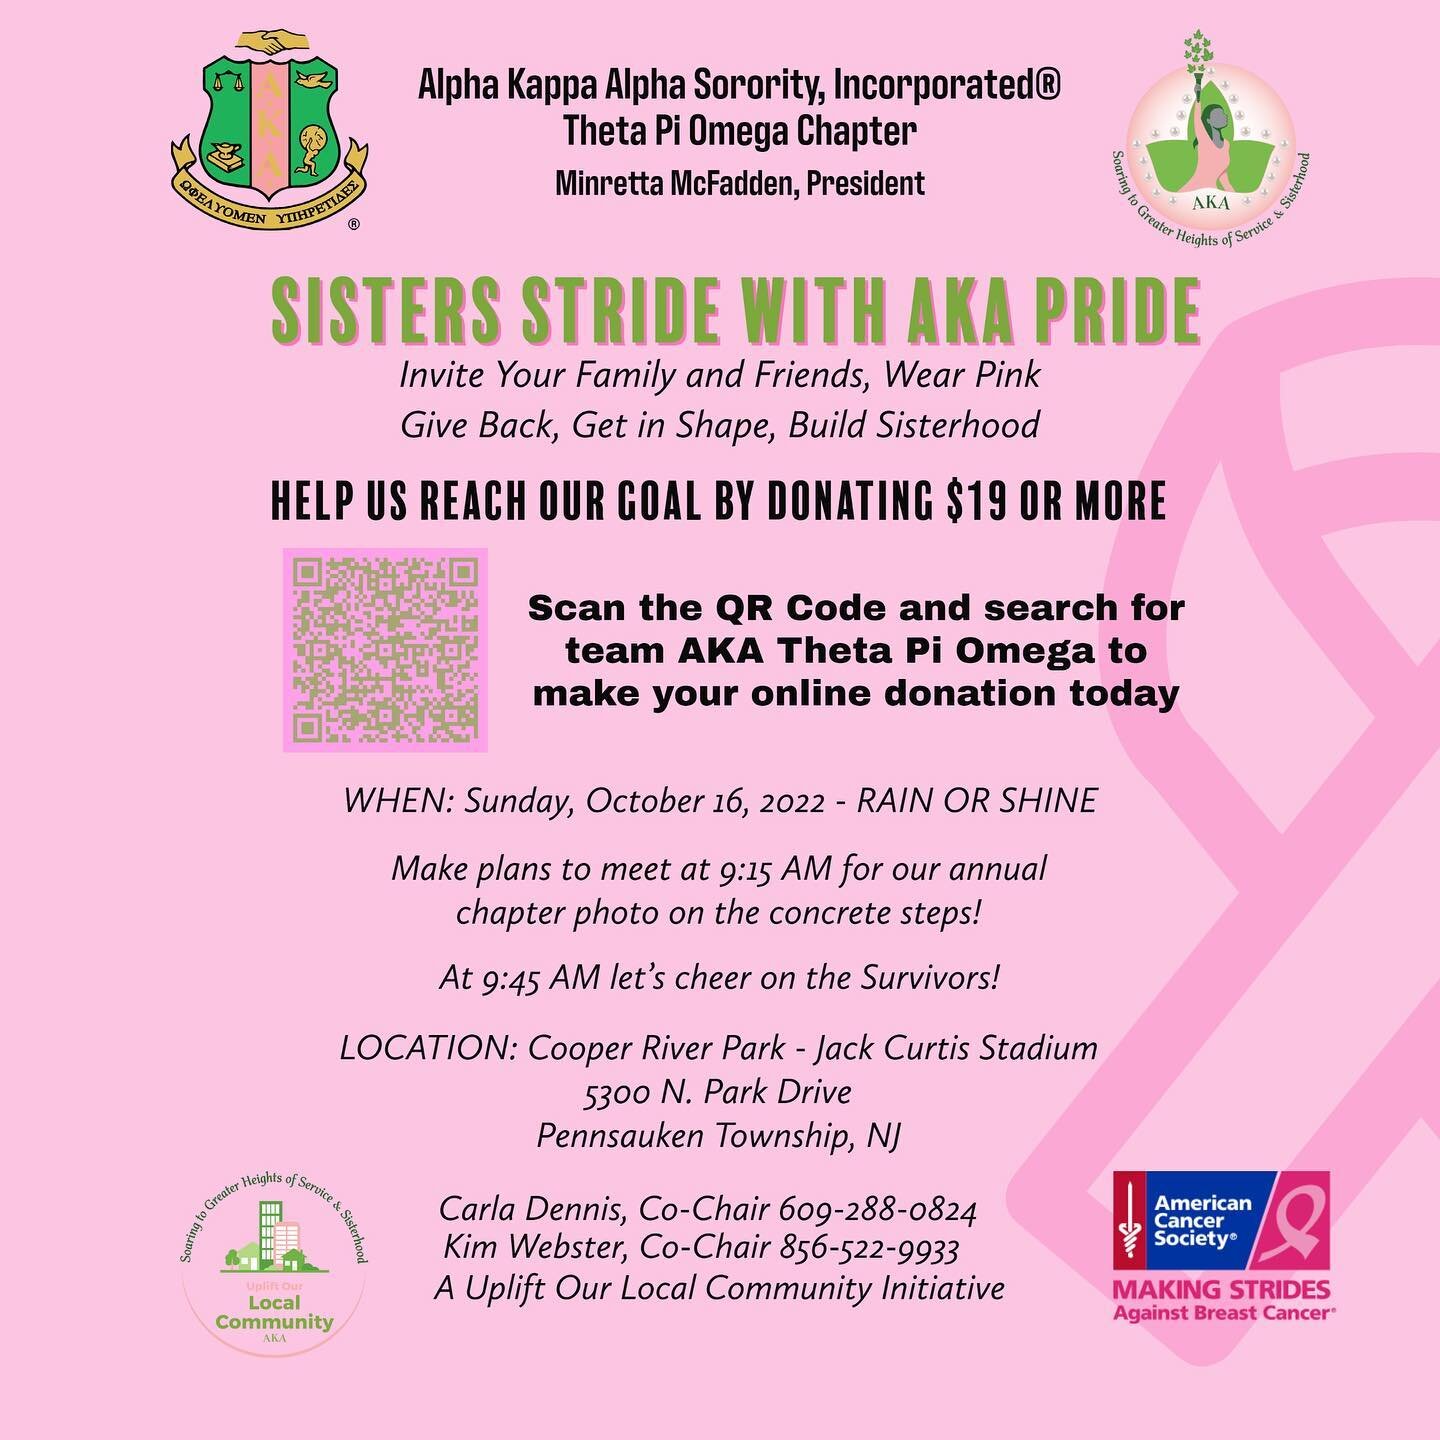 Please join Theta Pi Omega as we Stride with AKA PRIDE! #breastcancerawareness #aka1908 #nar1908 http://main.acsevents.org/goto/akatpo